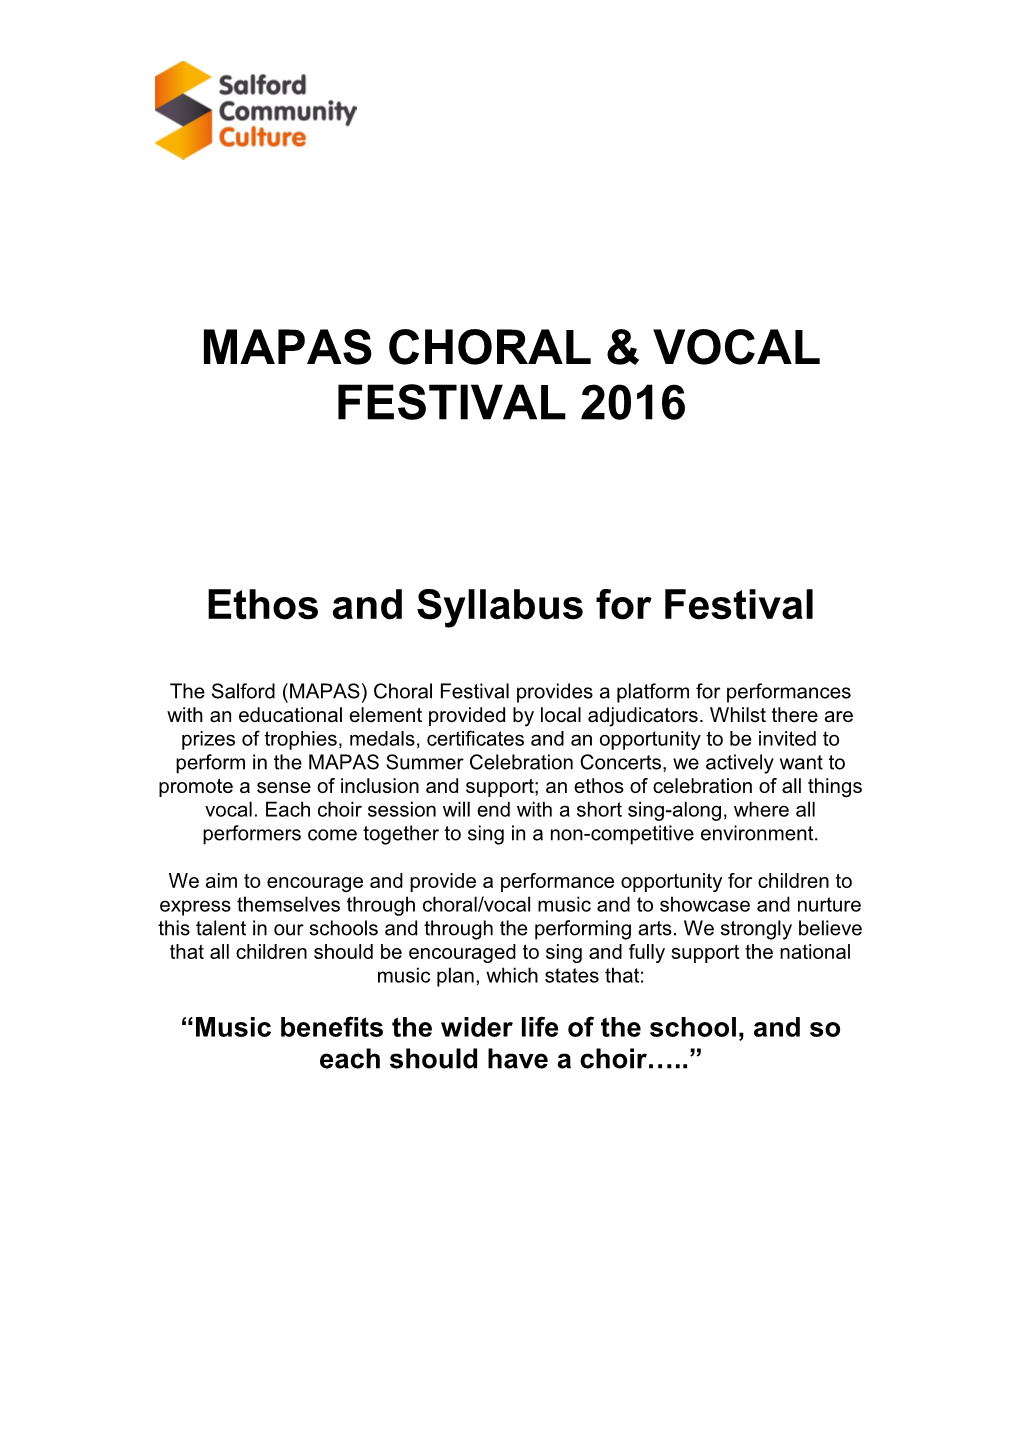 The Salford (Mapas) Vocal/Choral Festival Provides a Platform for Amateur Performances